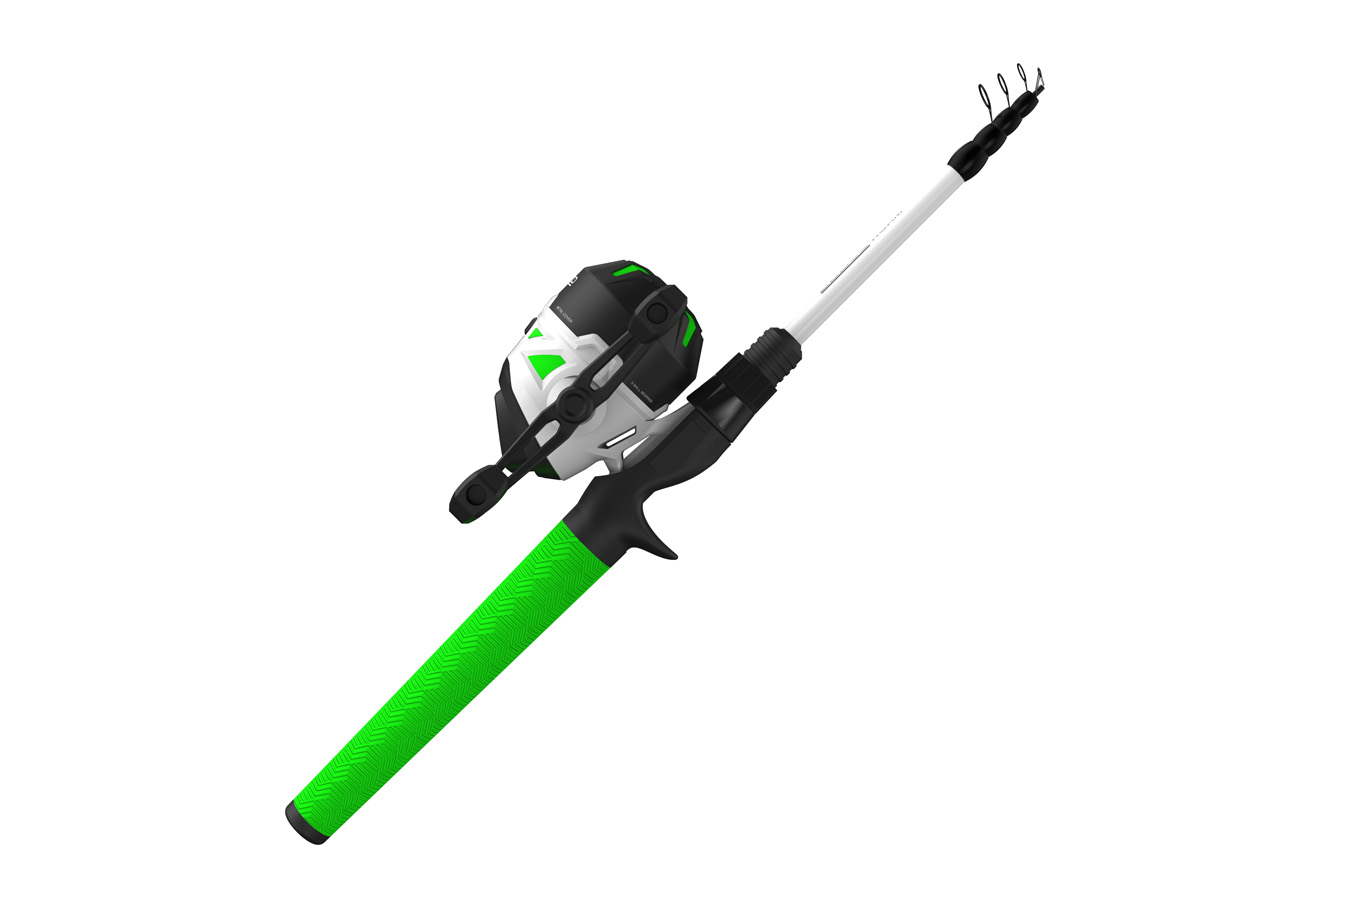 Zebco Roam Spincast Reel and Telescopic Fishing Rod Combo, 6-Foot